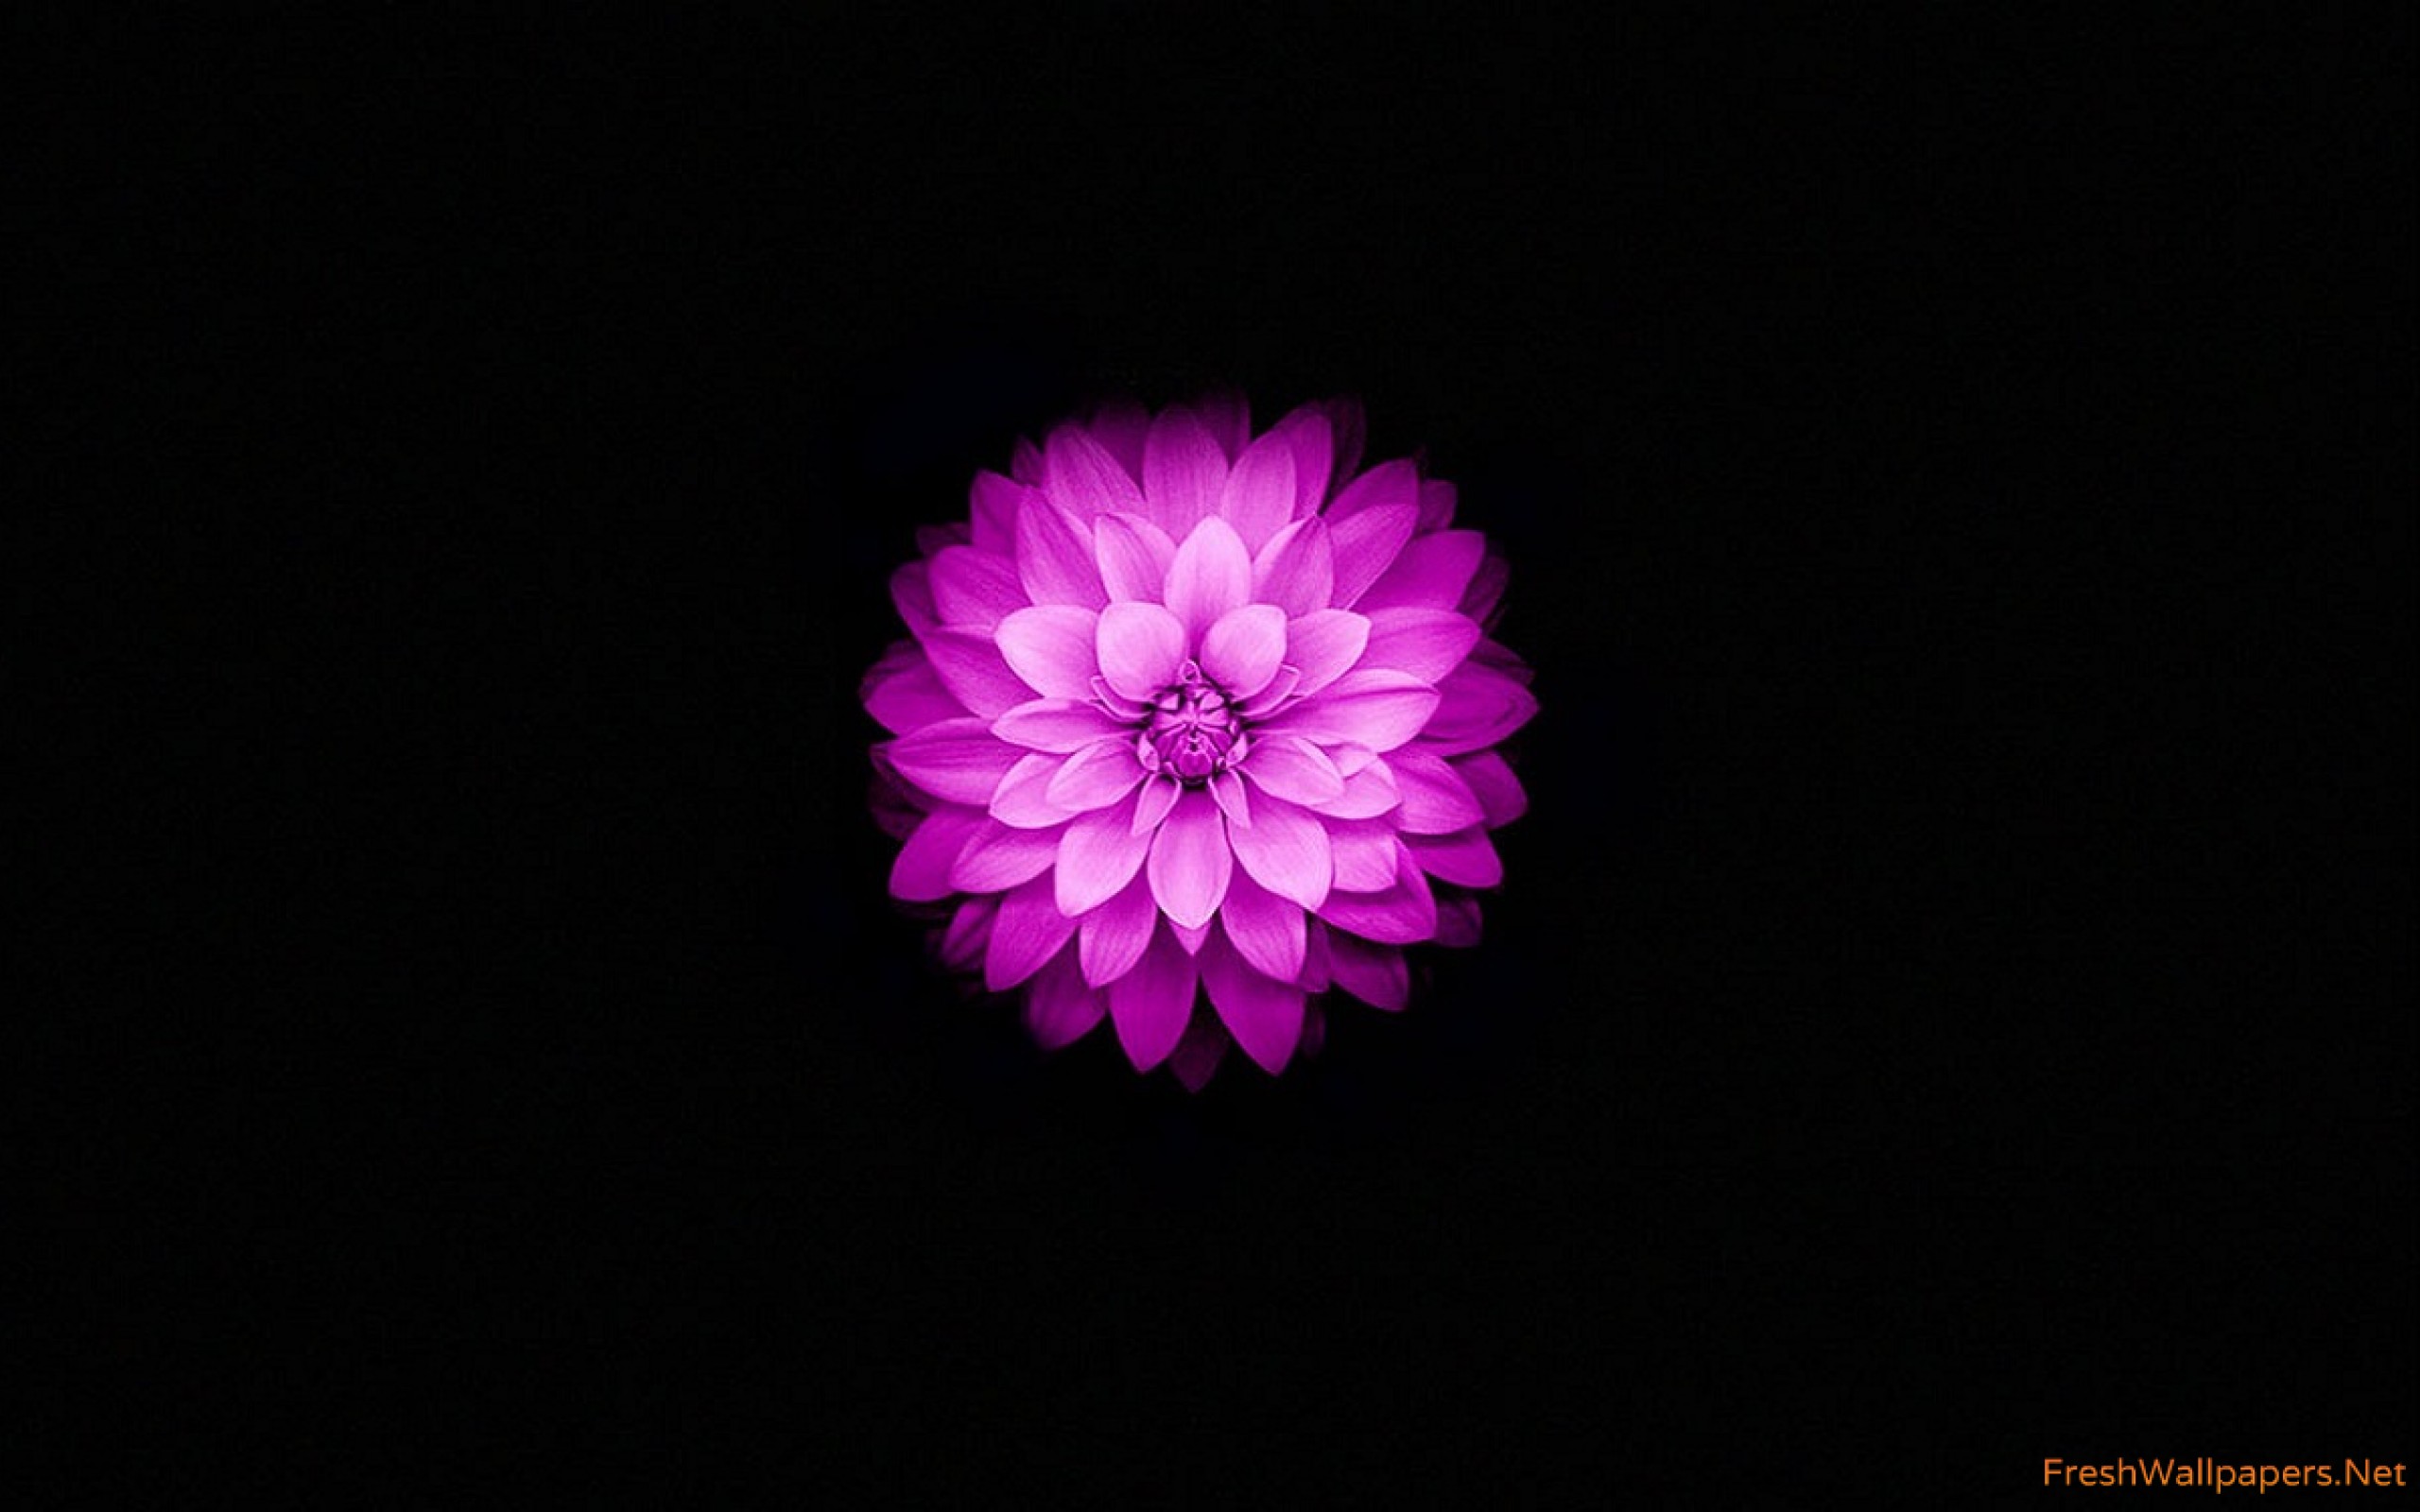 flor de loto fondo de pantalla para iphone,rosado,pétalo,violeta,púrpura,flor